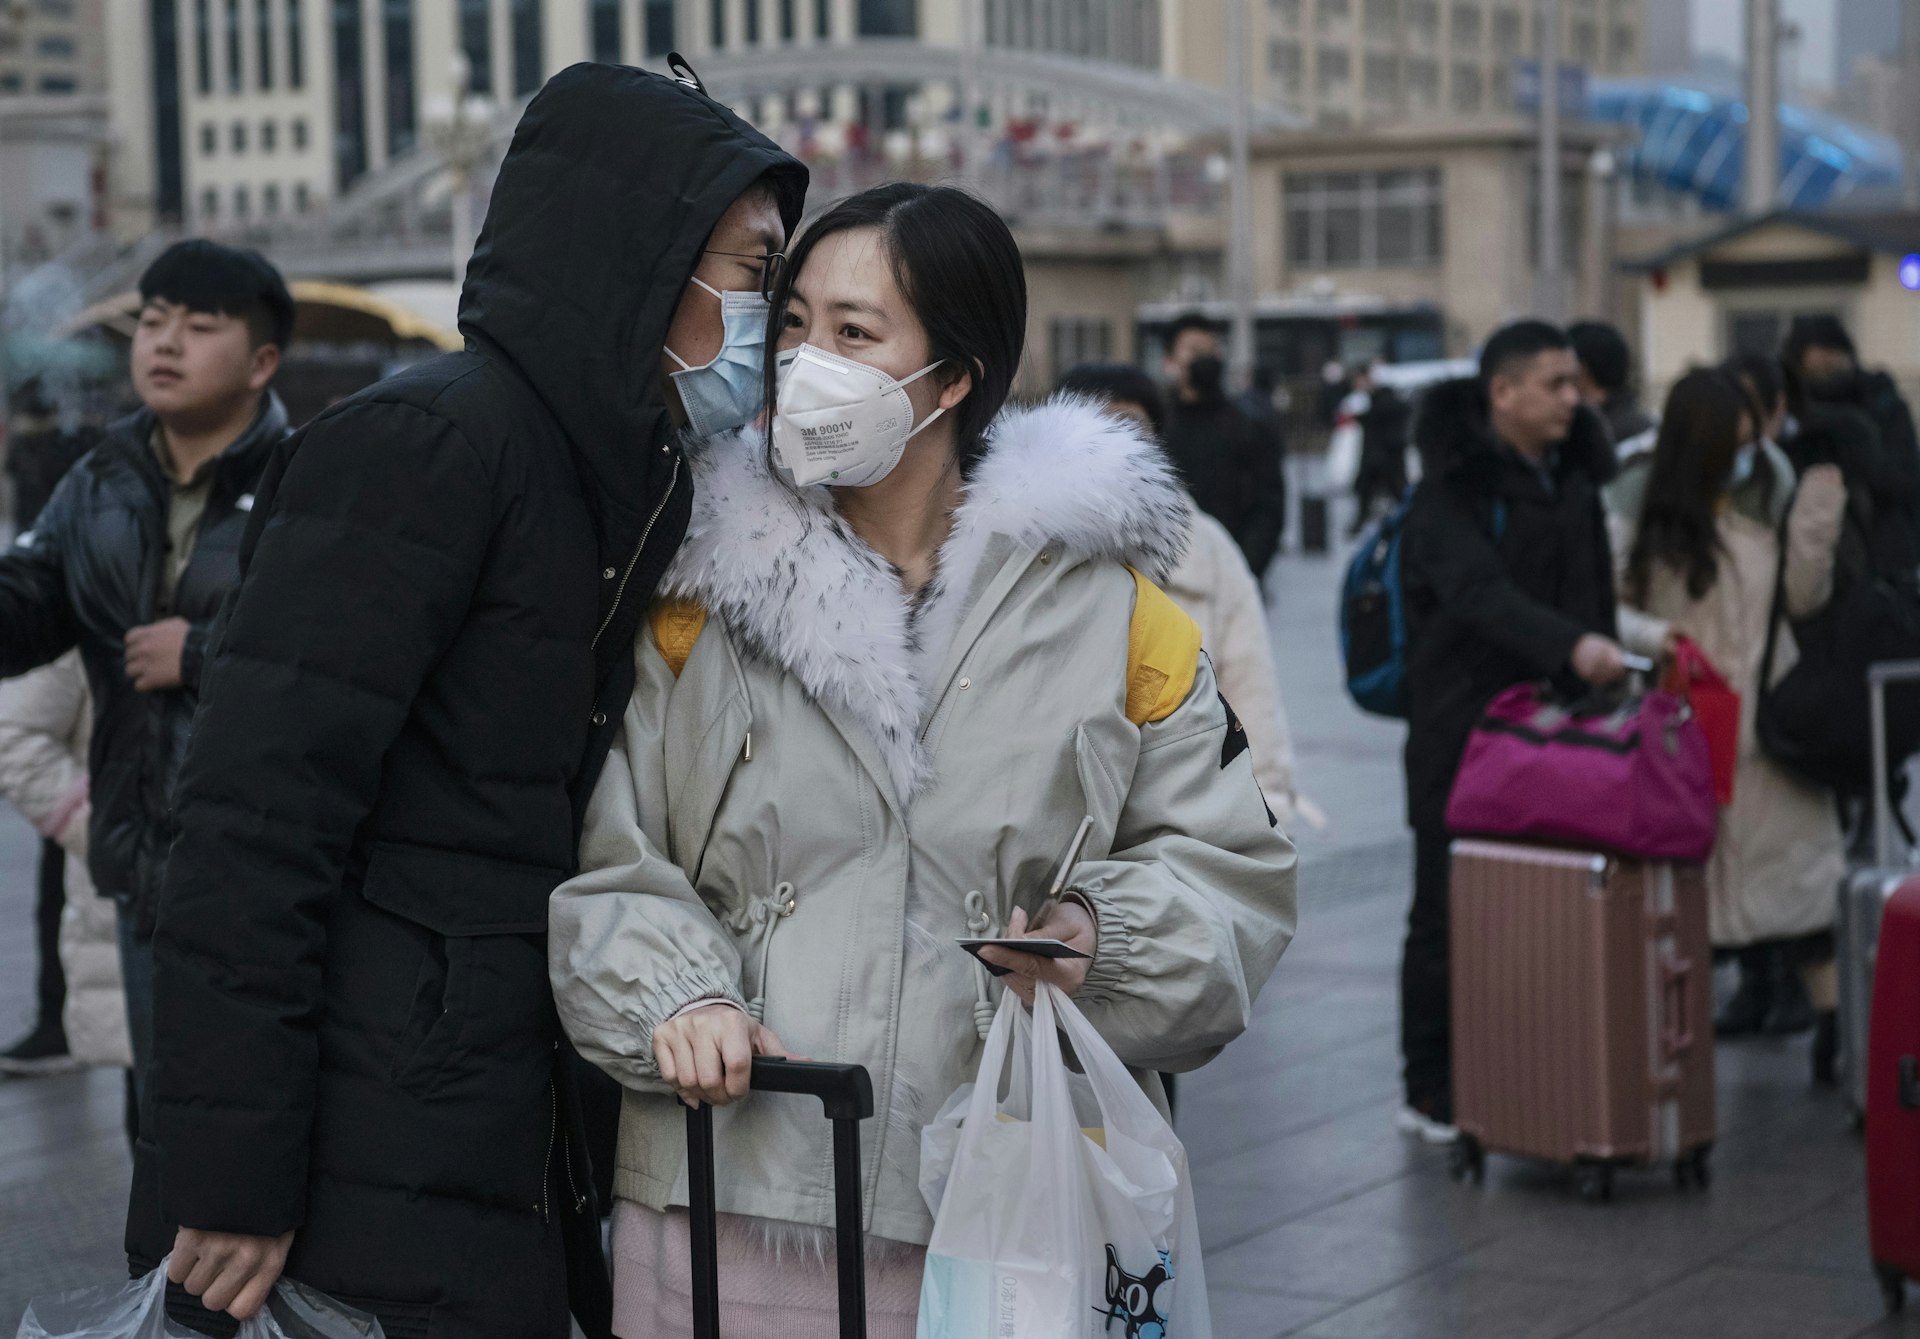 A man kisses his partner goodbye, both wearing face masks, during the coronavirus pandemic in Beijing.